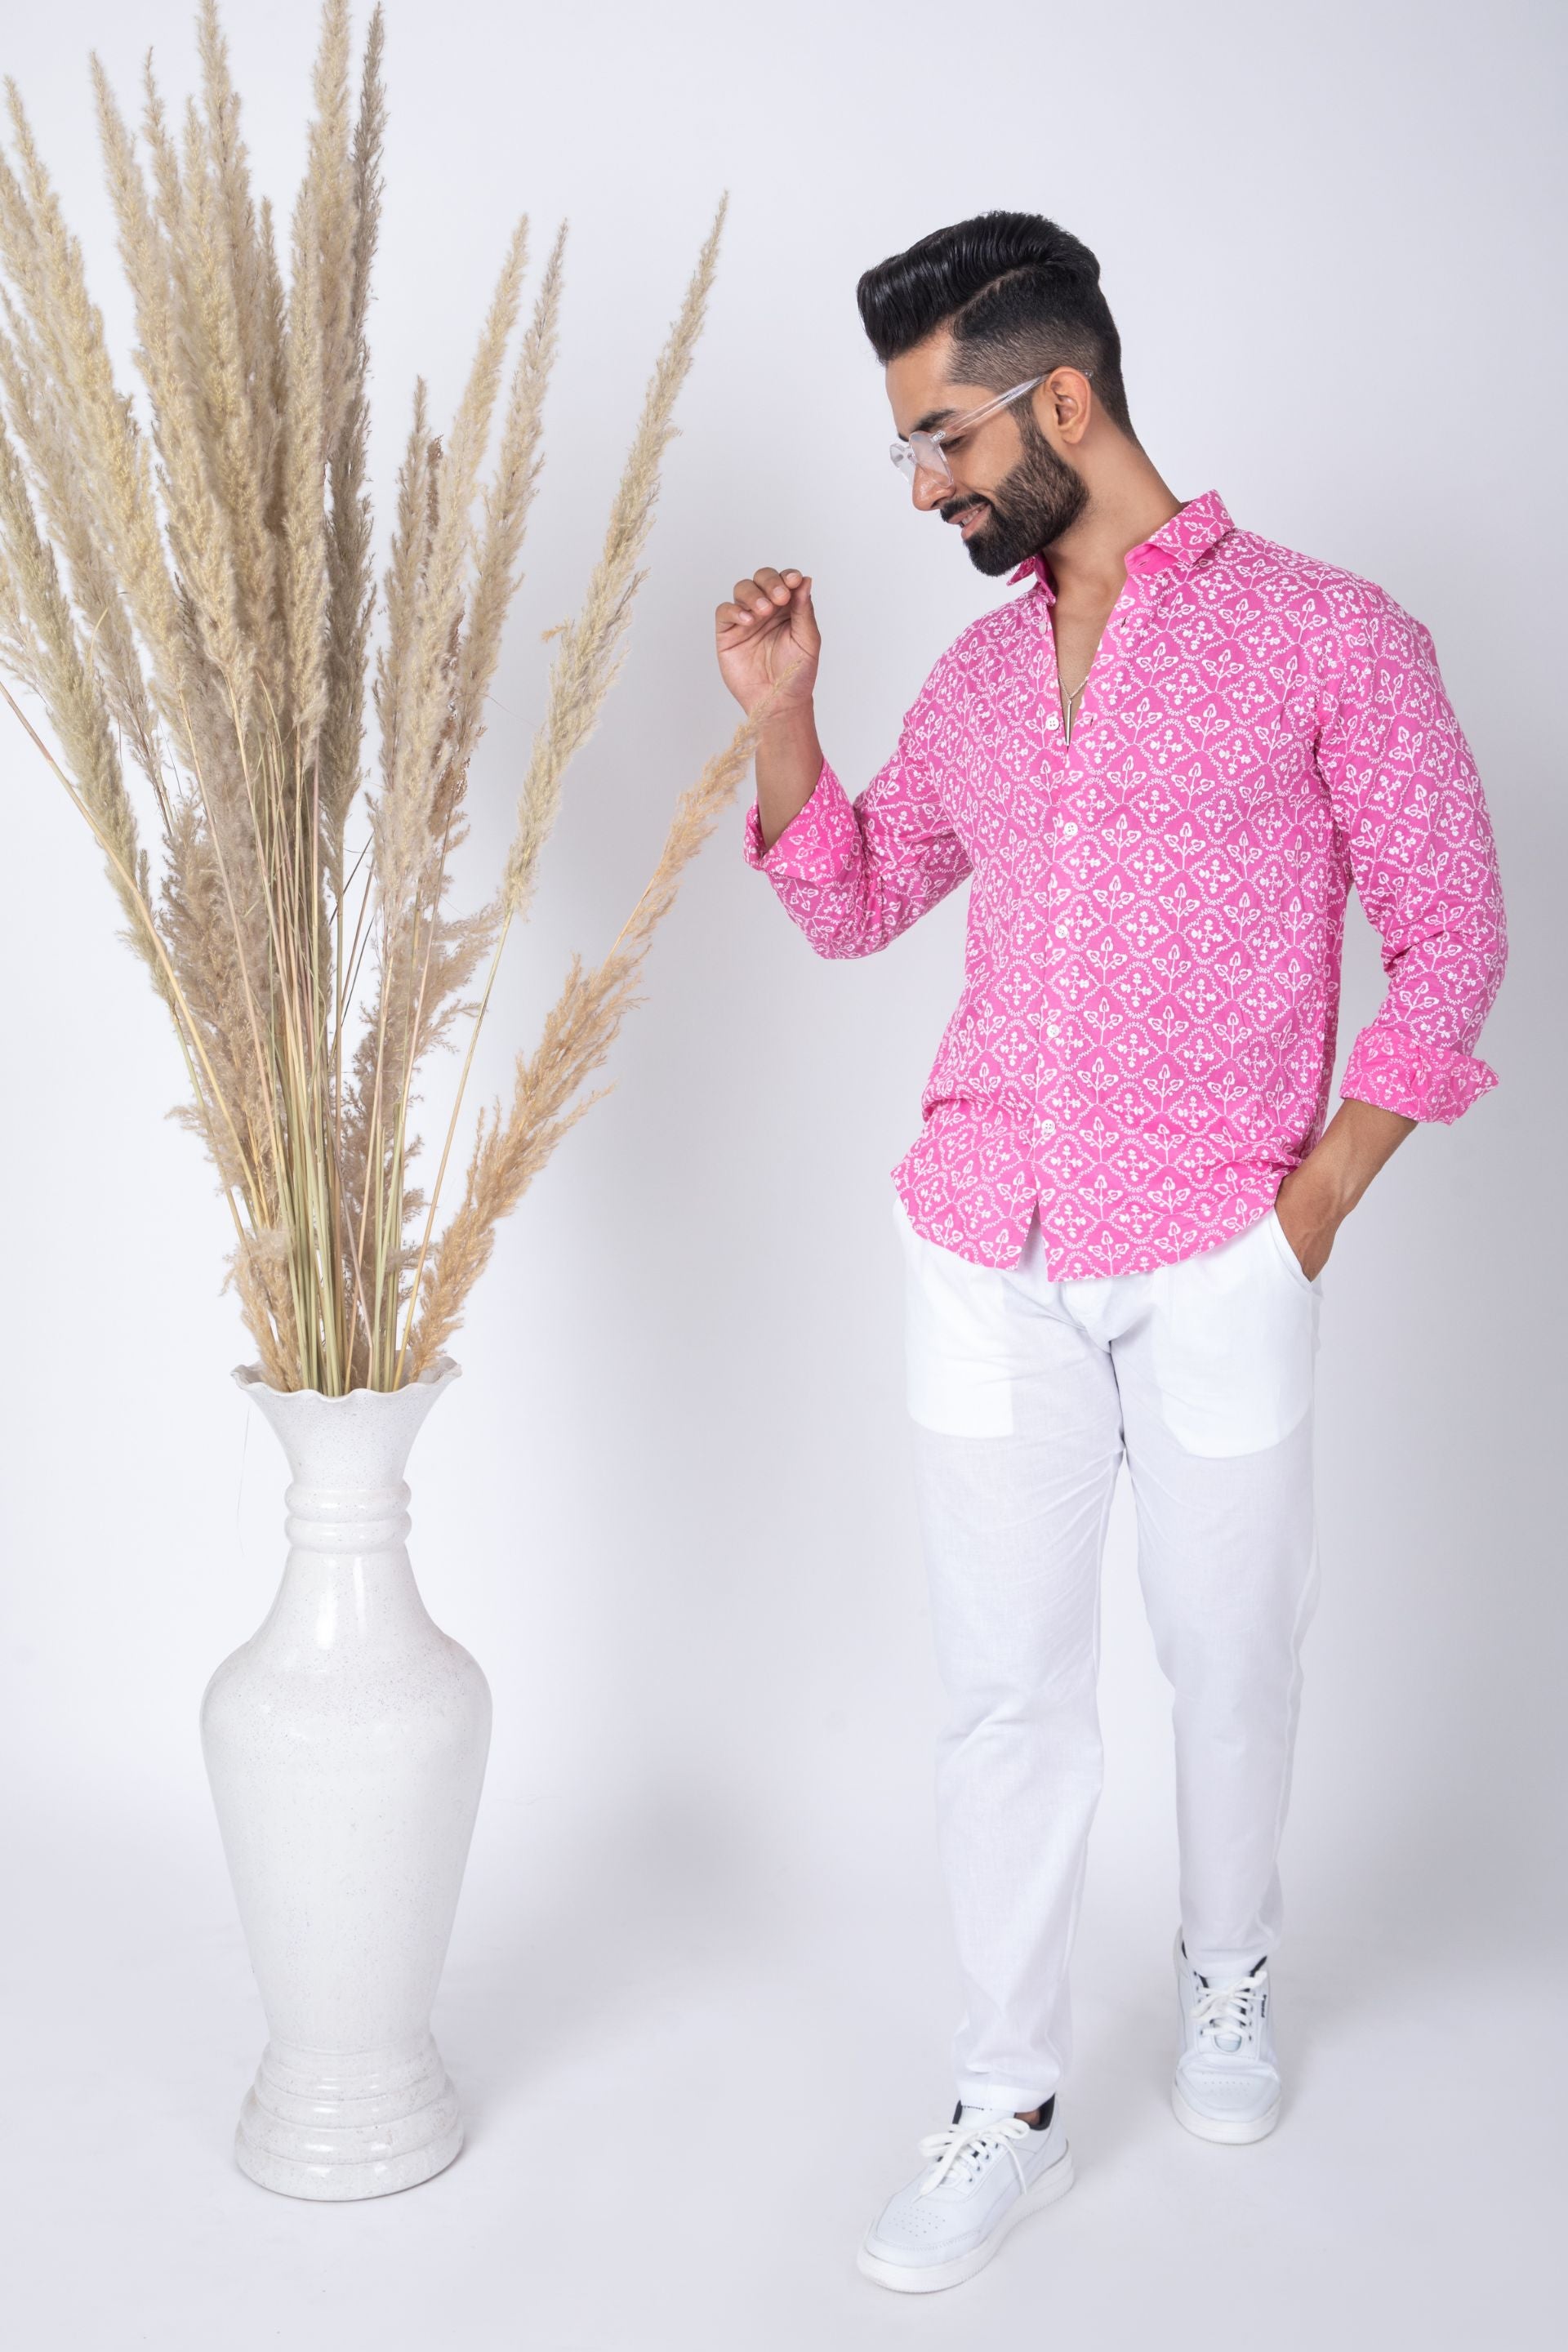 Firangi Yarn Super Soft Full Sleeves Chikankari Schiffli Embroided Men's Shirt